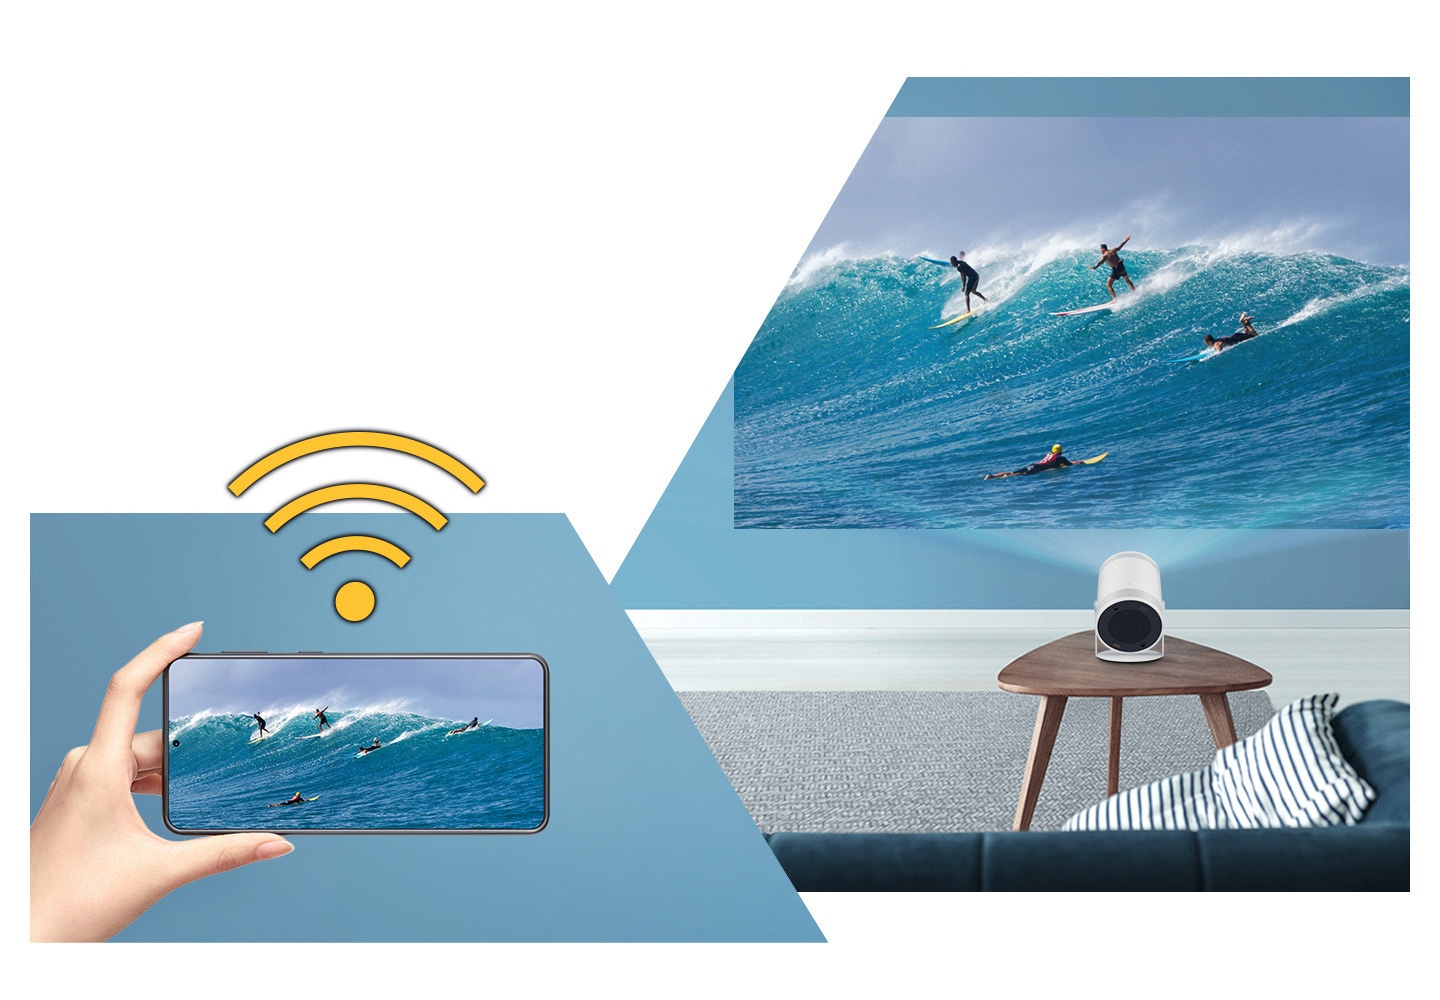 Wi-Fi sign over hand holding a mobile device. Surfing picture на мобильном устройстве запечатлен на Freestyle's большой экран.